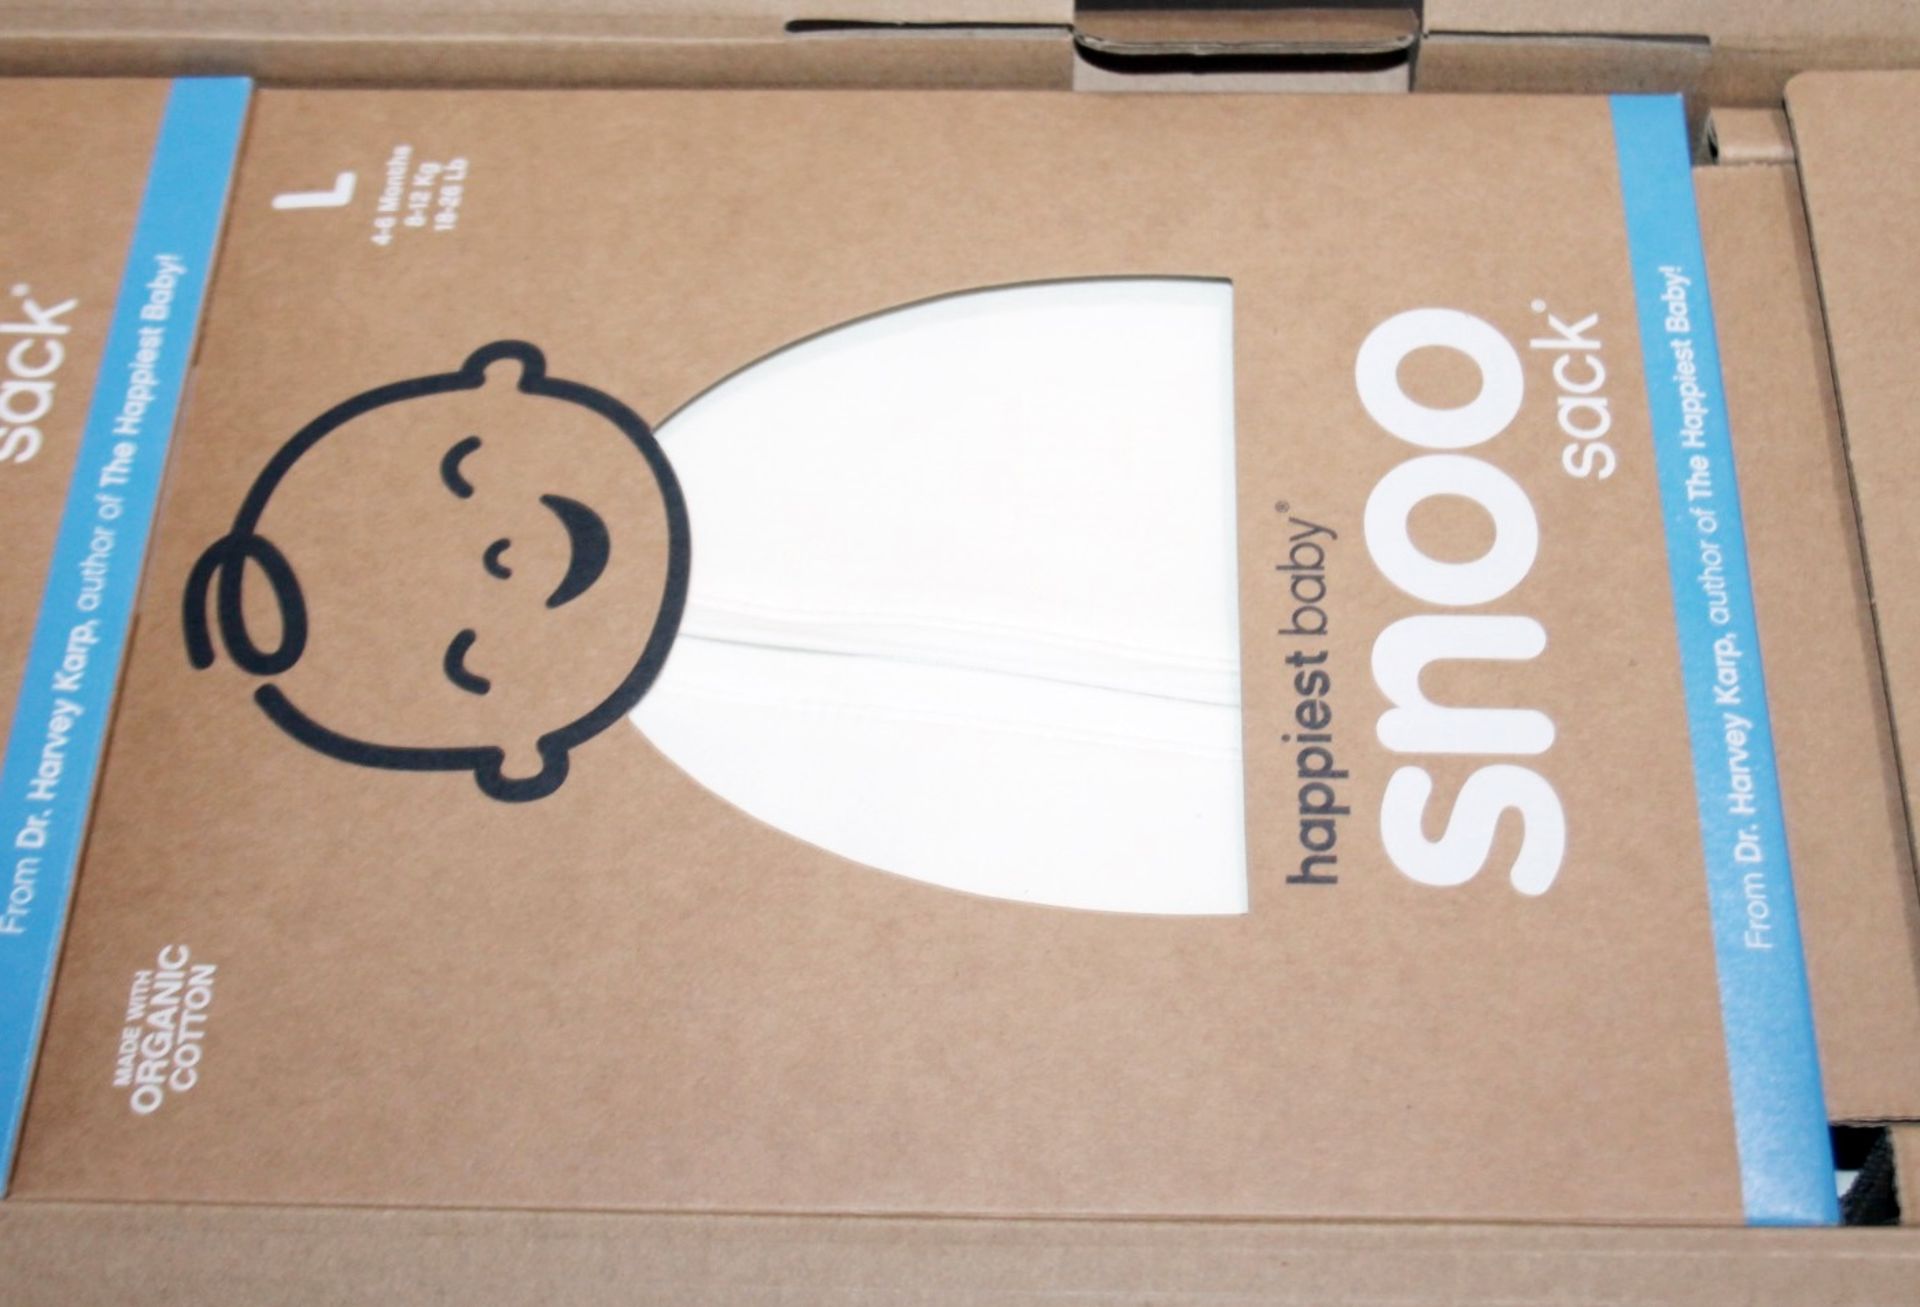 1 x HAPPIEST BABY 'SNOO' Smart Sleeper Baby Cot - Original Price £1,145 - Unused Boxed Stock - Image 9 of 25